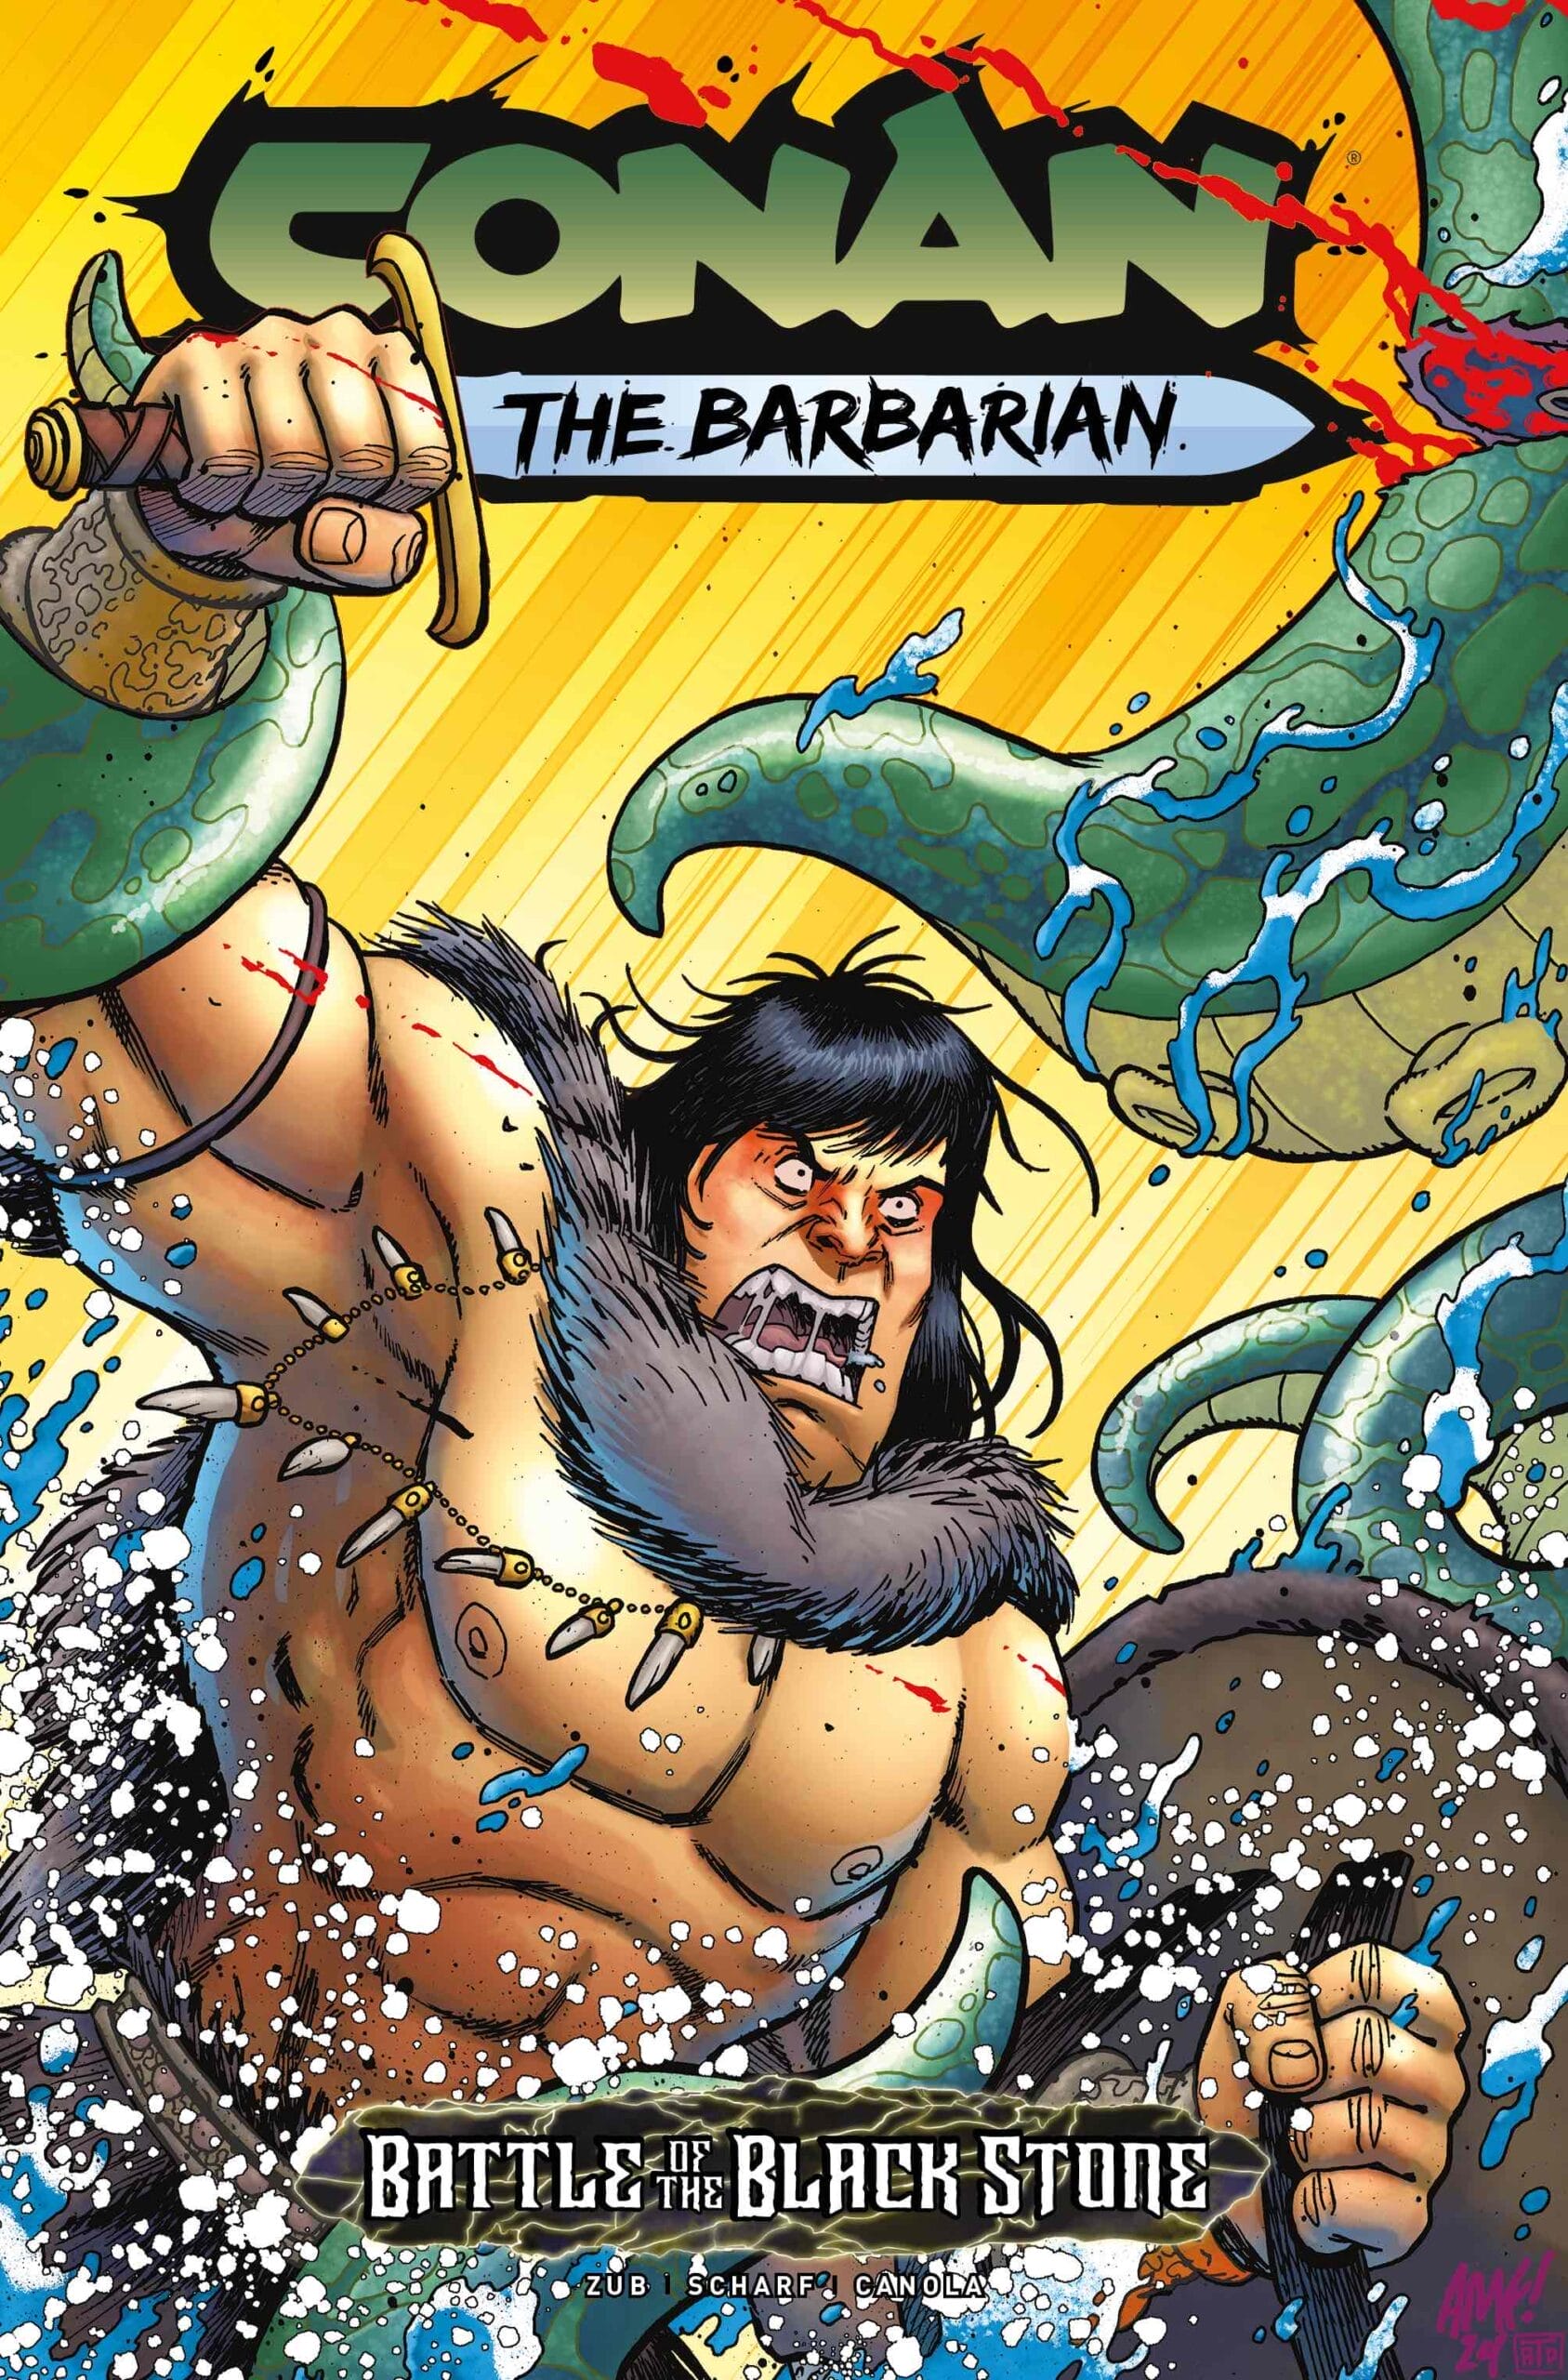 Comic book cover: Cartoon Conan versus tendrils